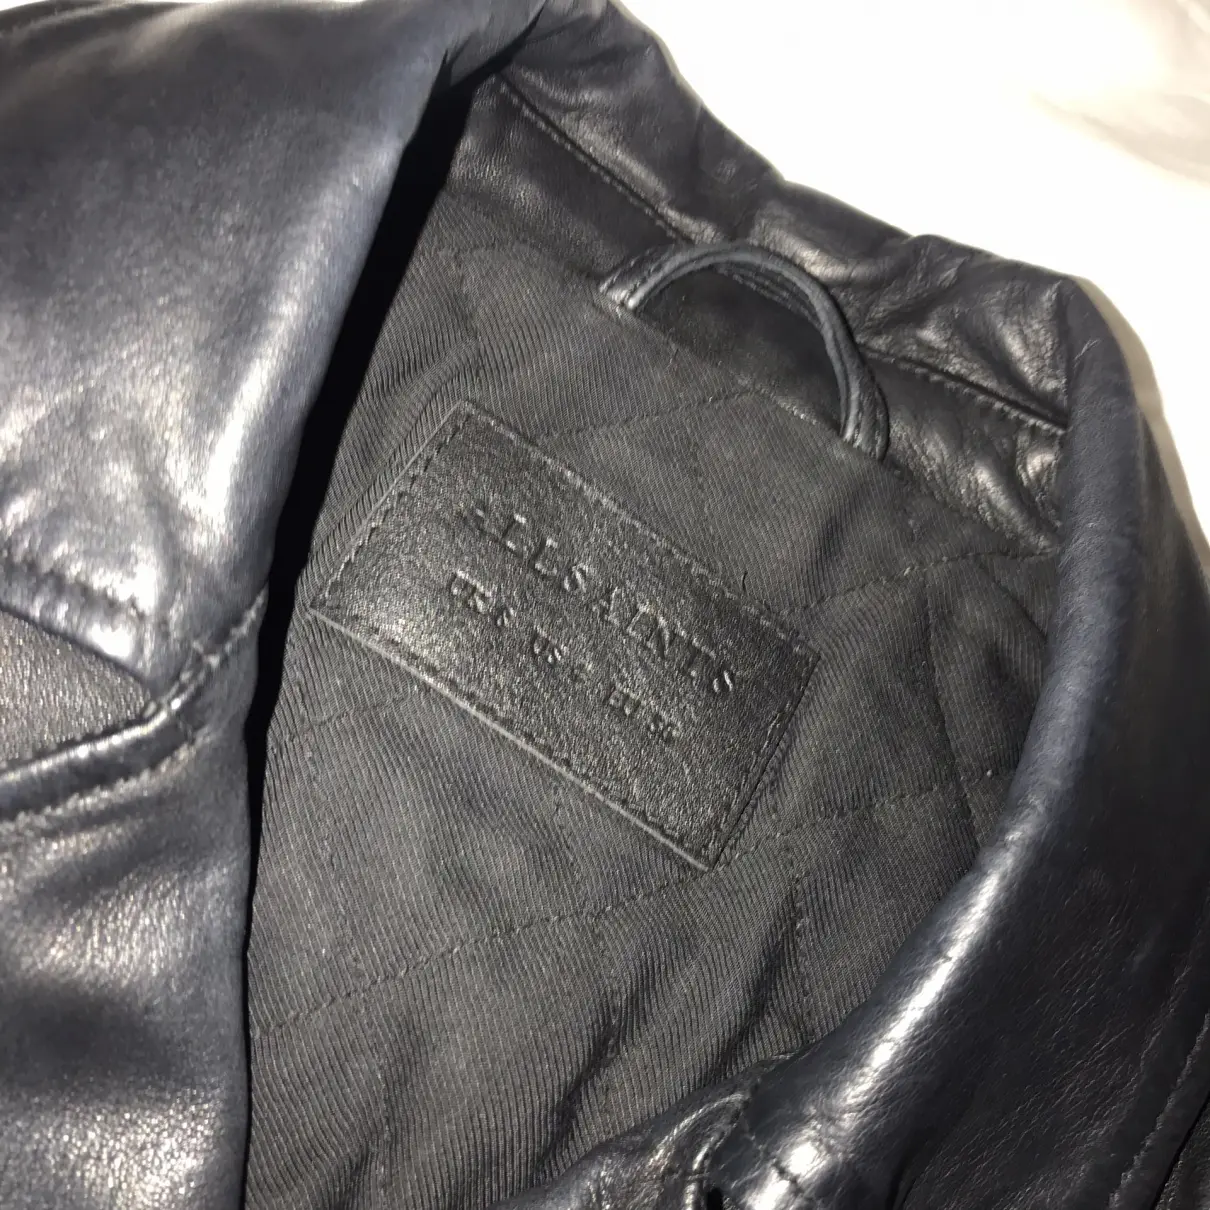 Buy All Saints Leather jacket online